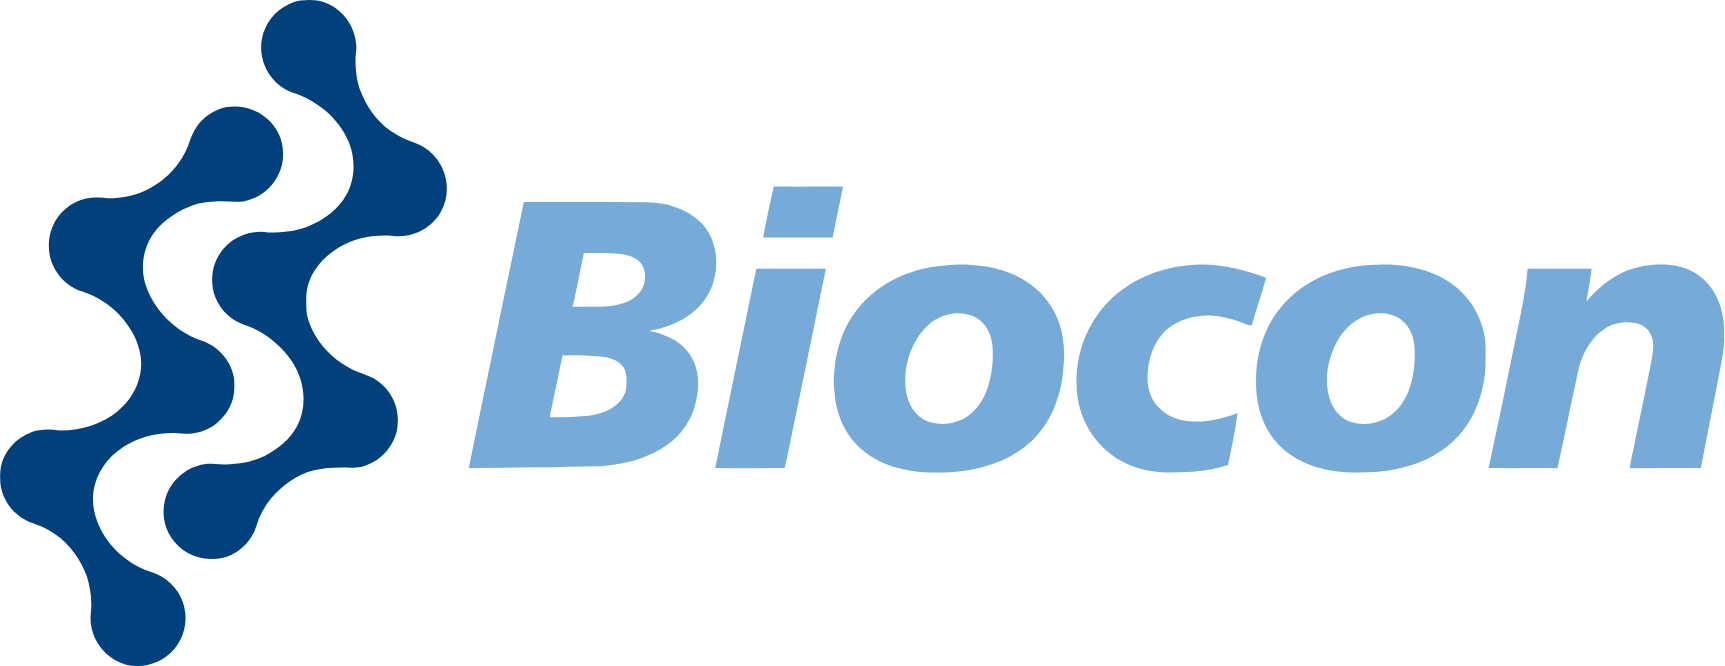 Biocon logo large (transparent PNG)